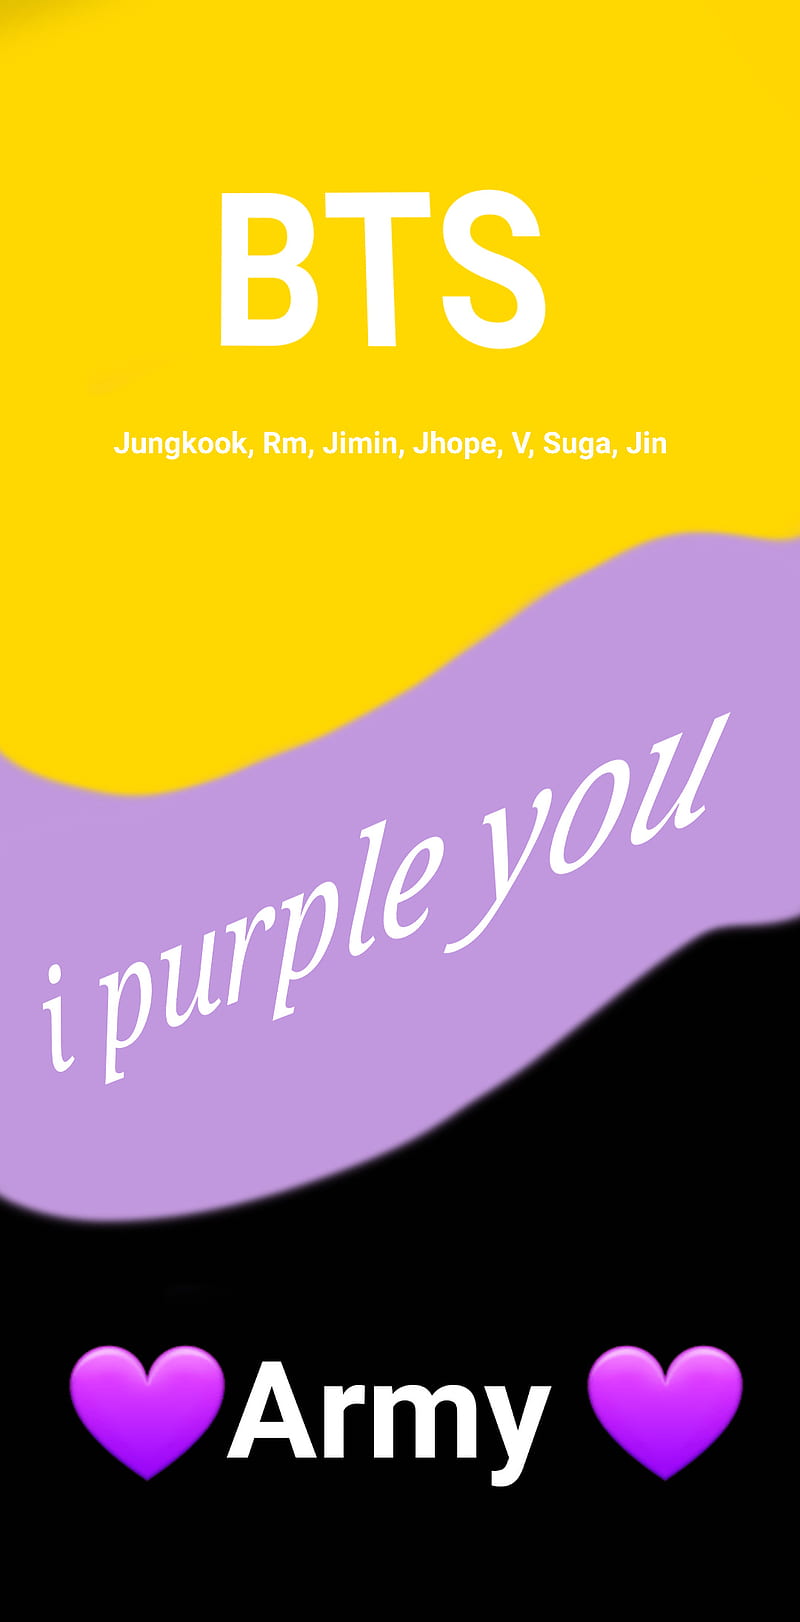 Bts, Names of members, Army, I purple you, HD phone wallpaper